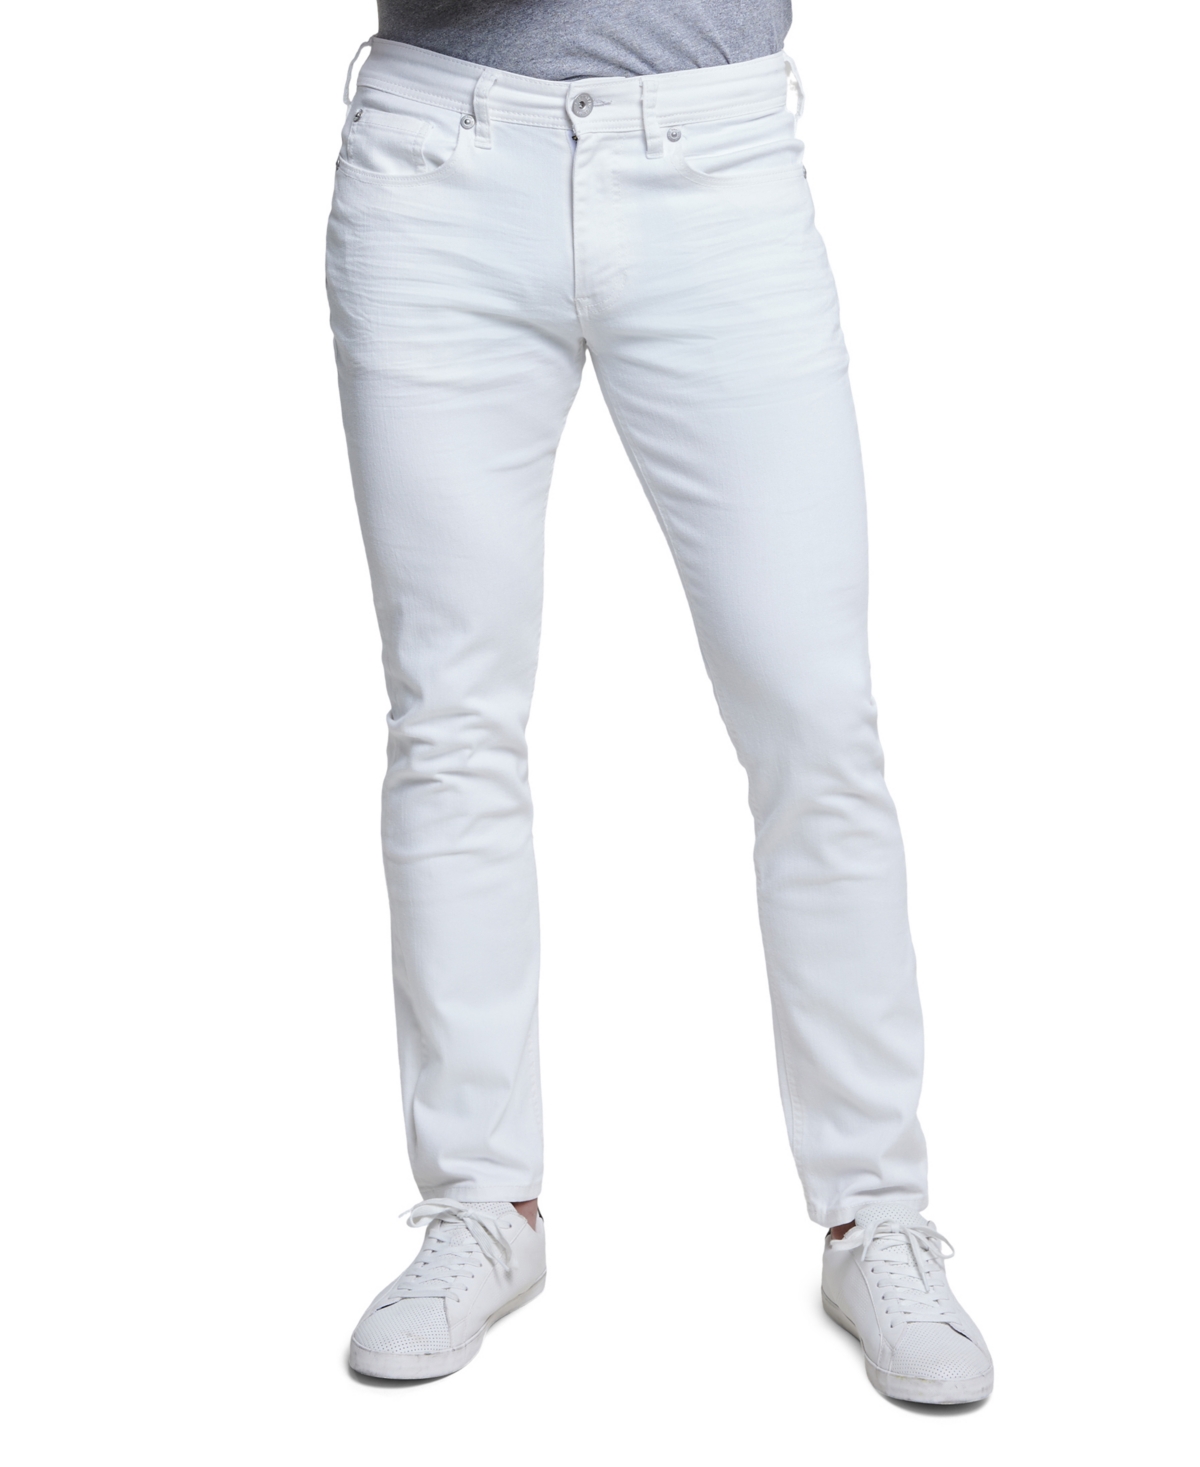 Jeans Men's Slim Straight Cut 5 Pocket Jean - White